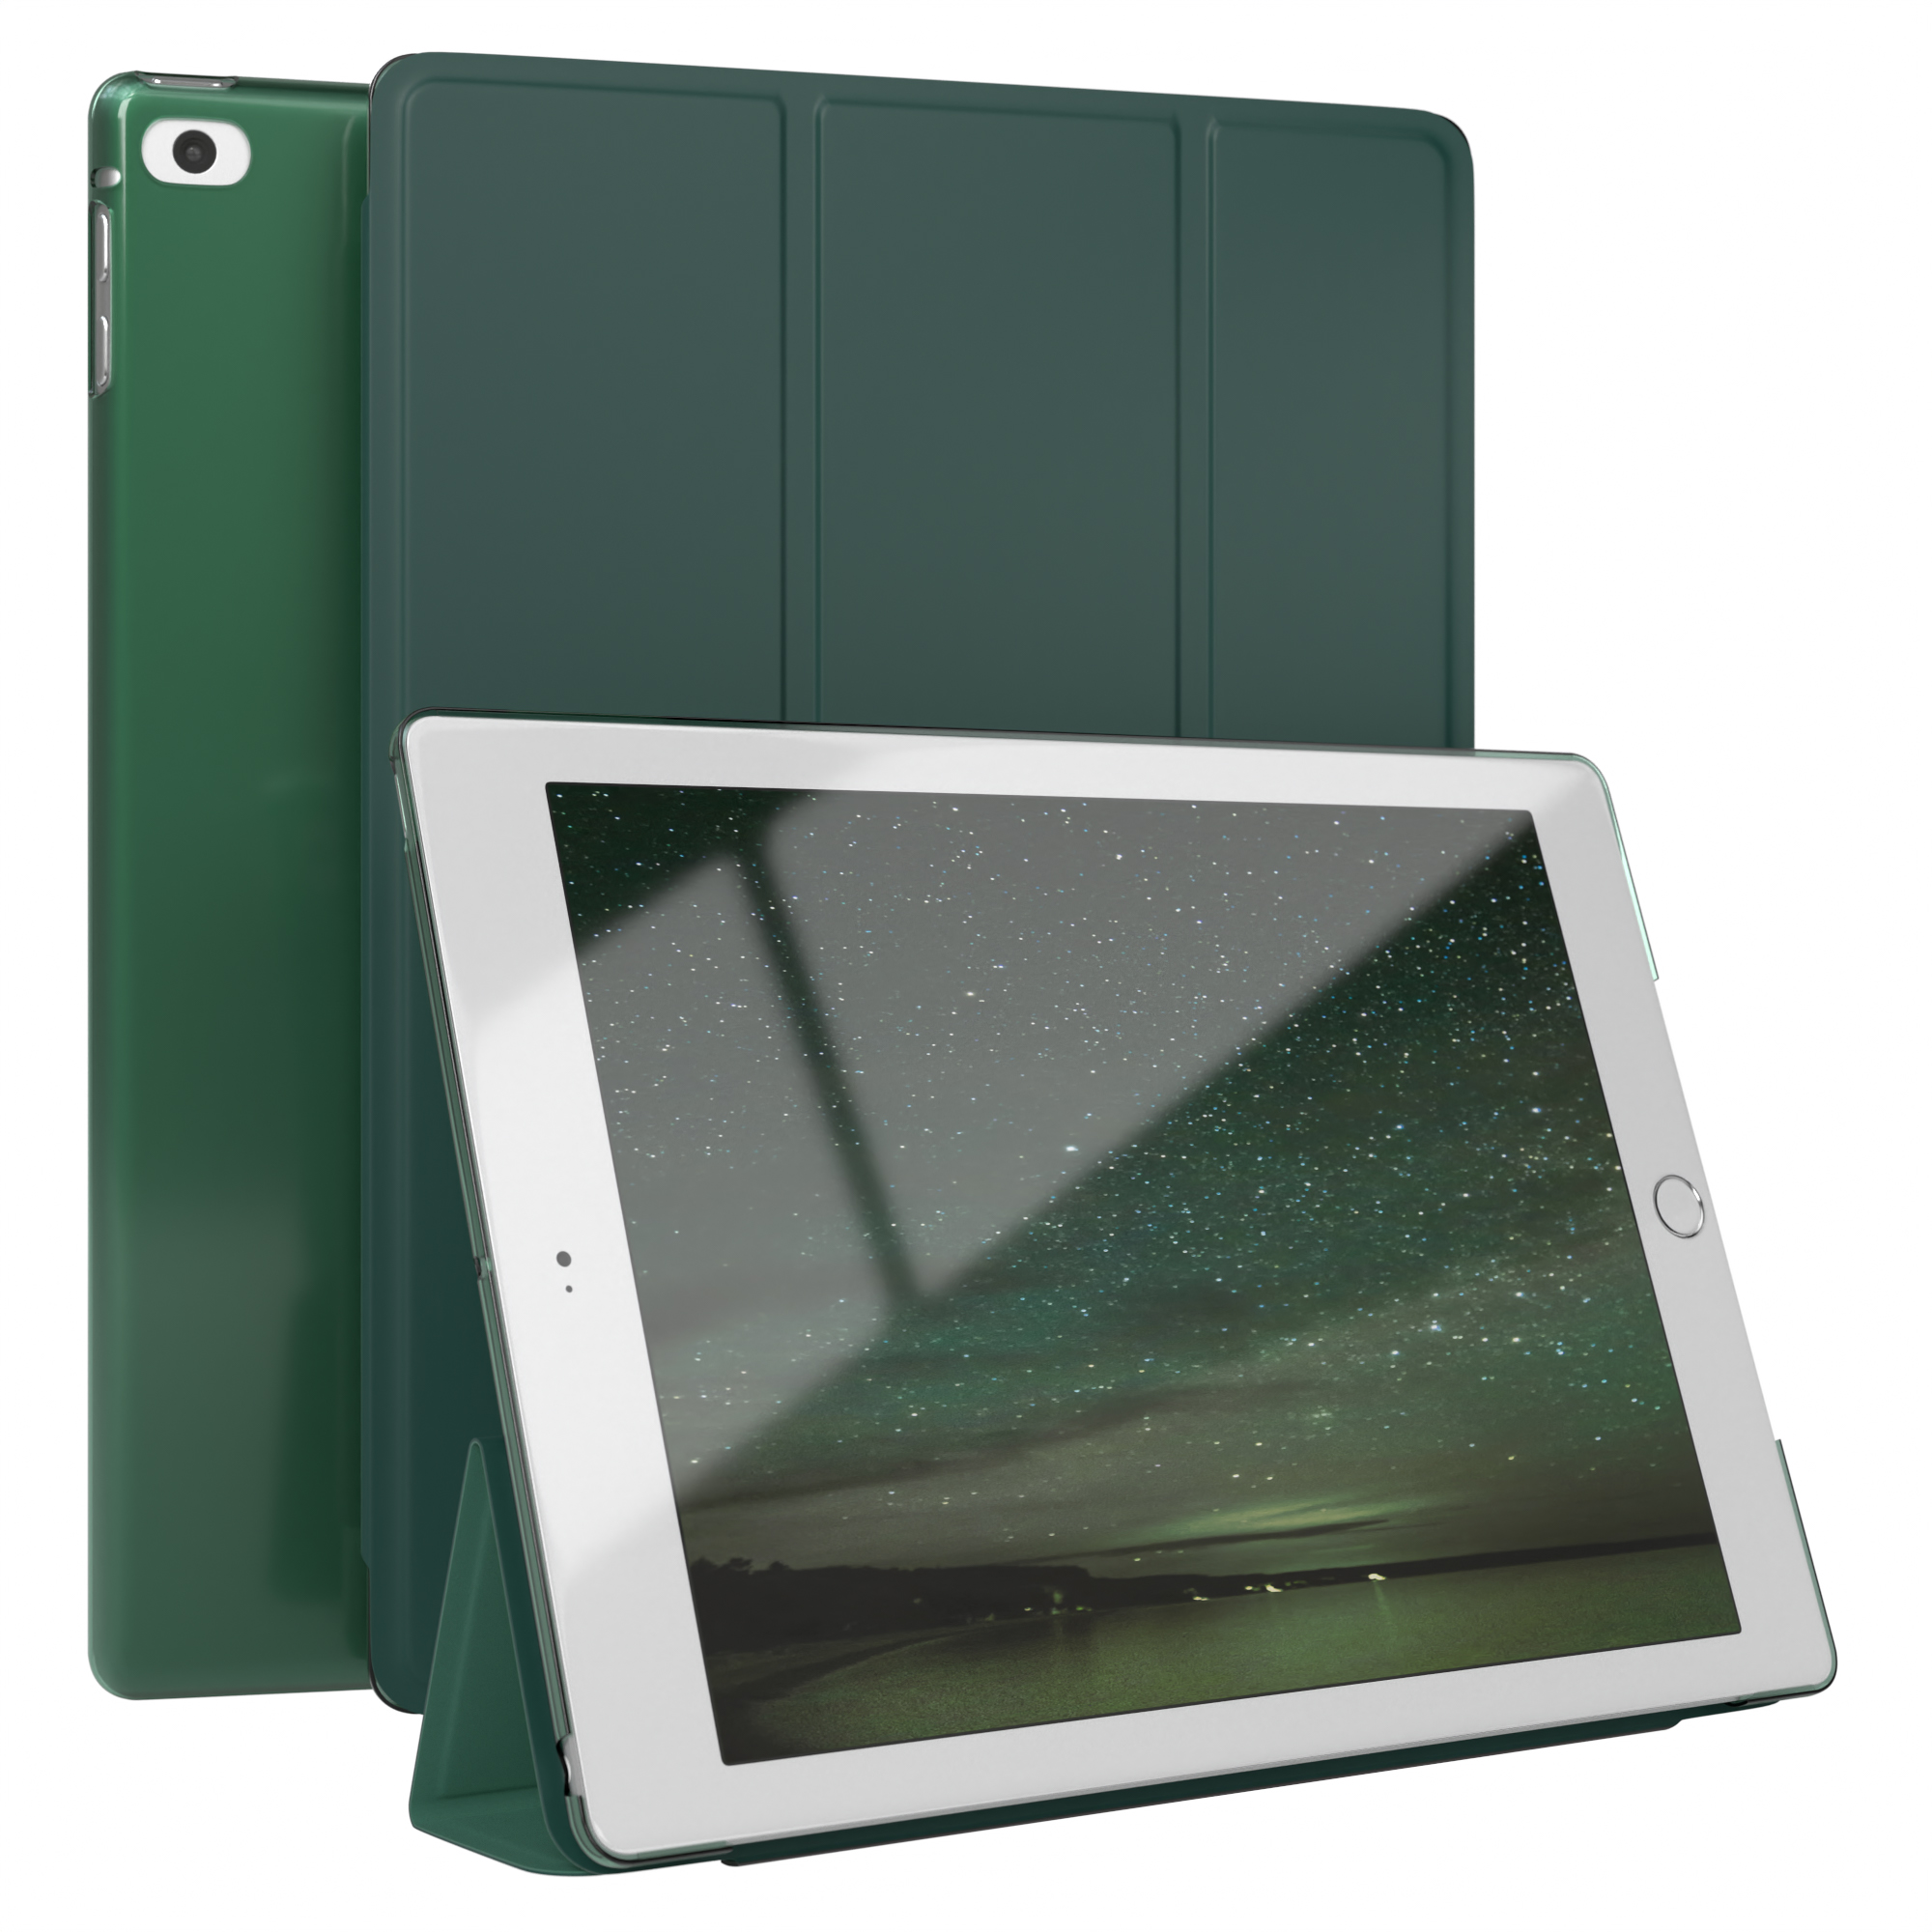 für Tablethülle Air 5./6. & Smart Kunstleder, Dunkelgrün Generation für Case 1/Air EAZY CASE Bookcover iPad Apple 2